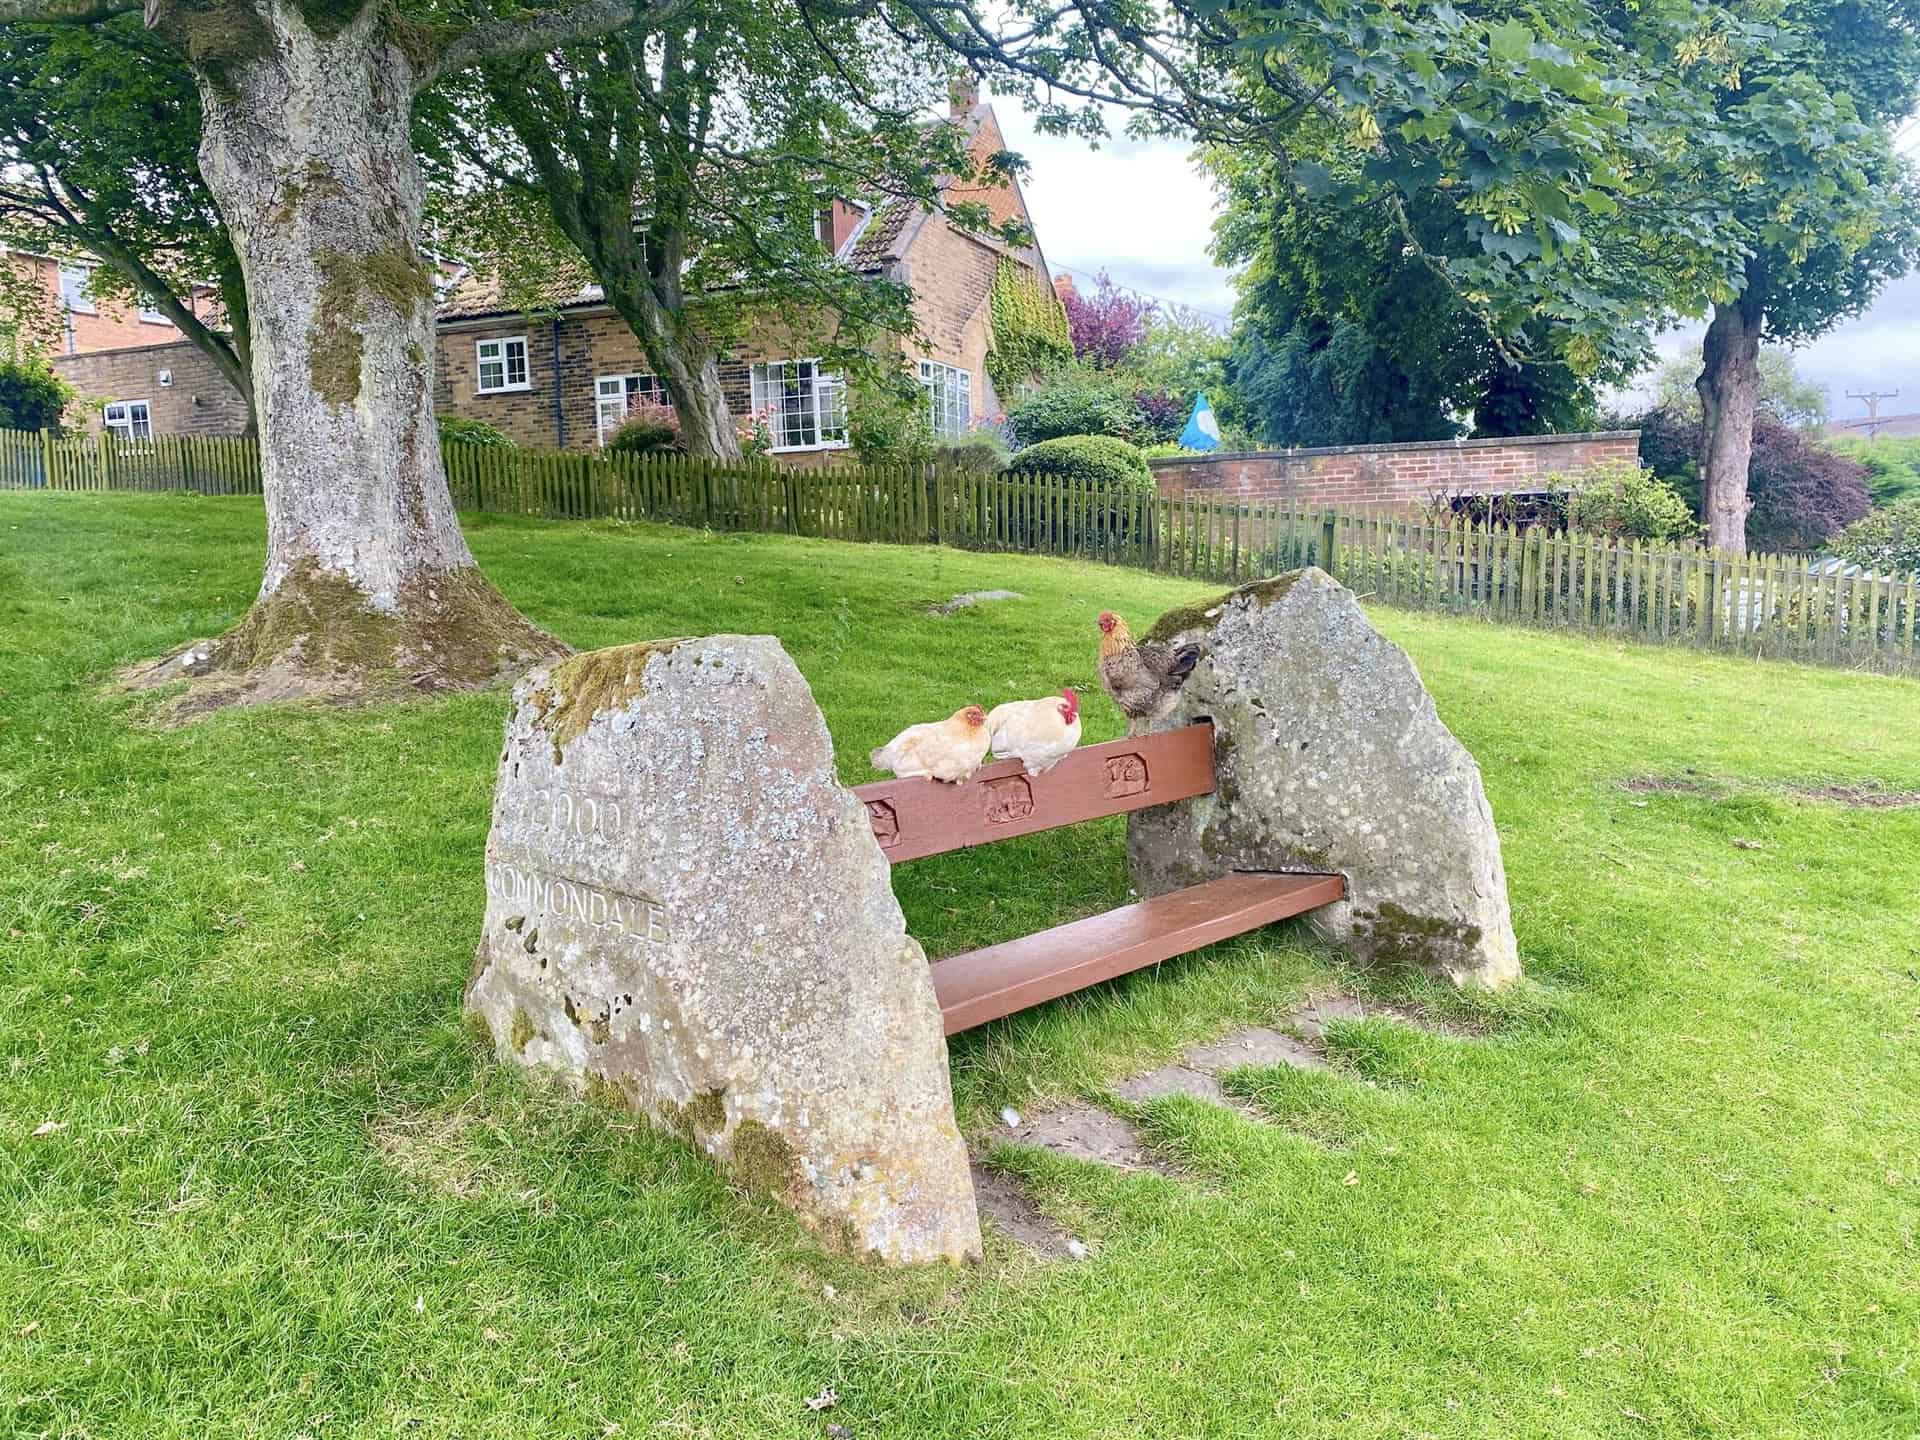 Millennium bench on Commondale village green.